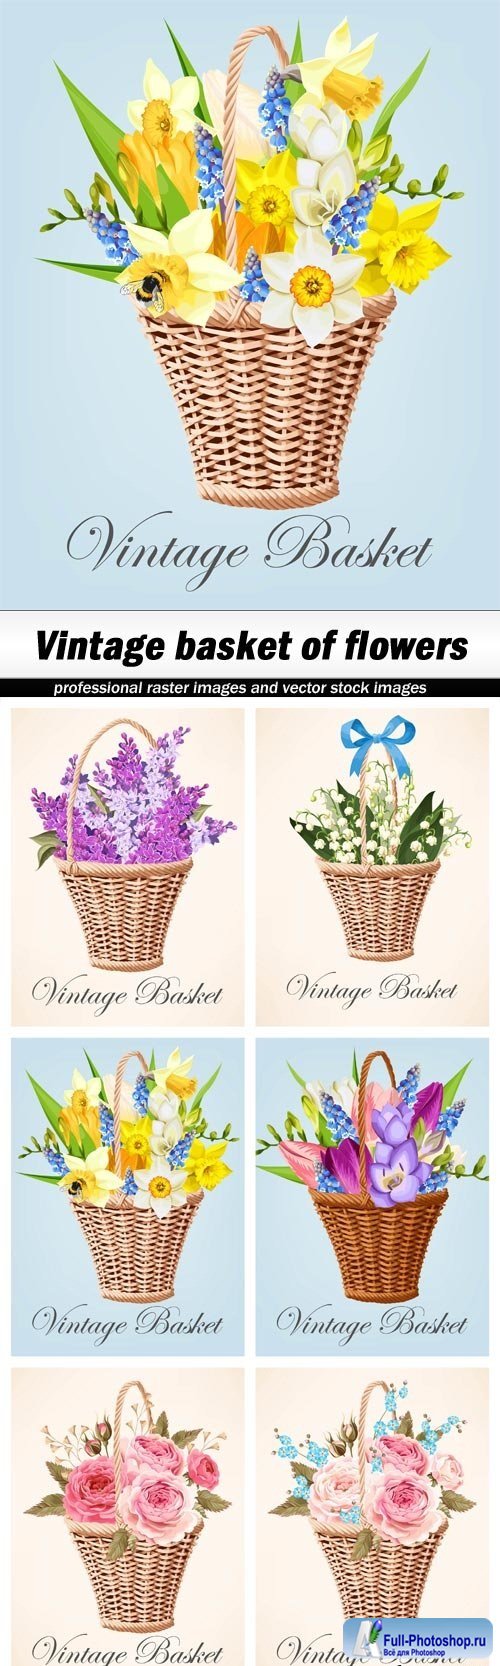 Vintage basket of flowers - 6 EPS